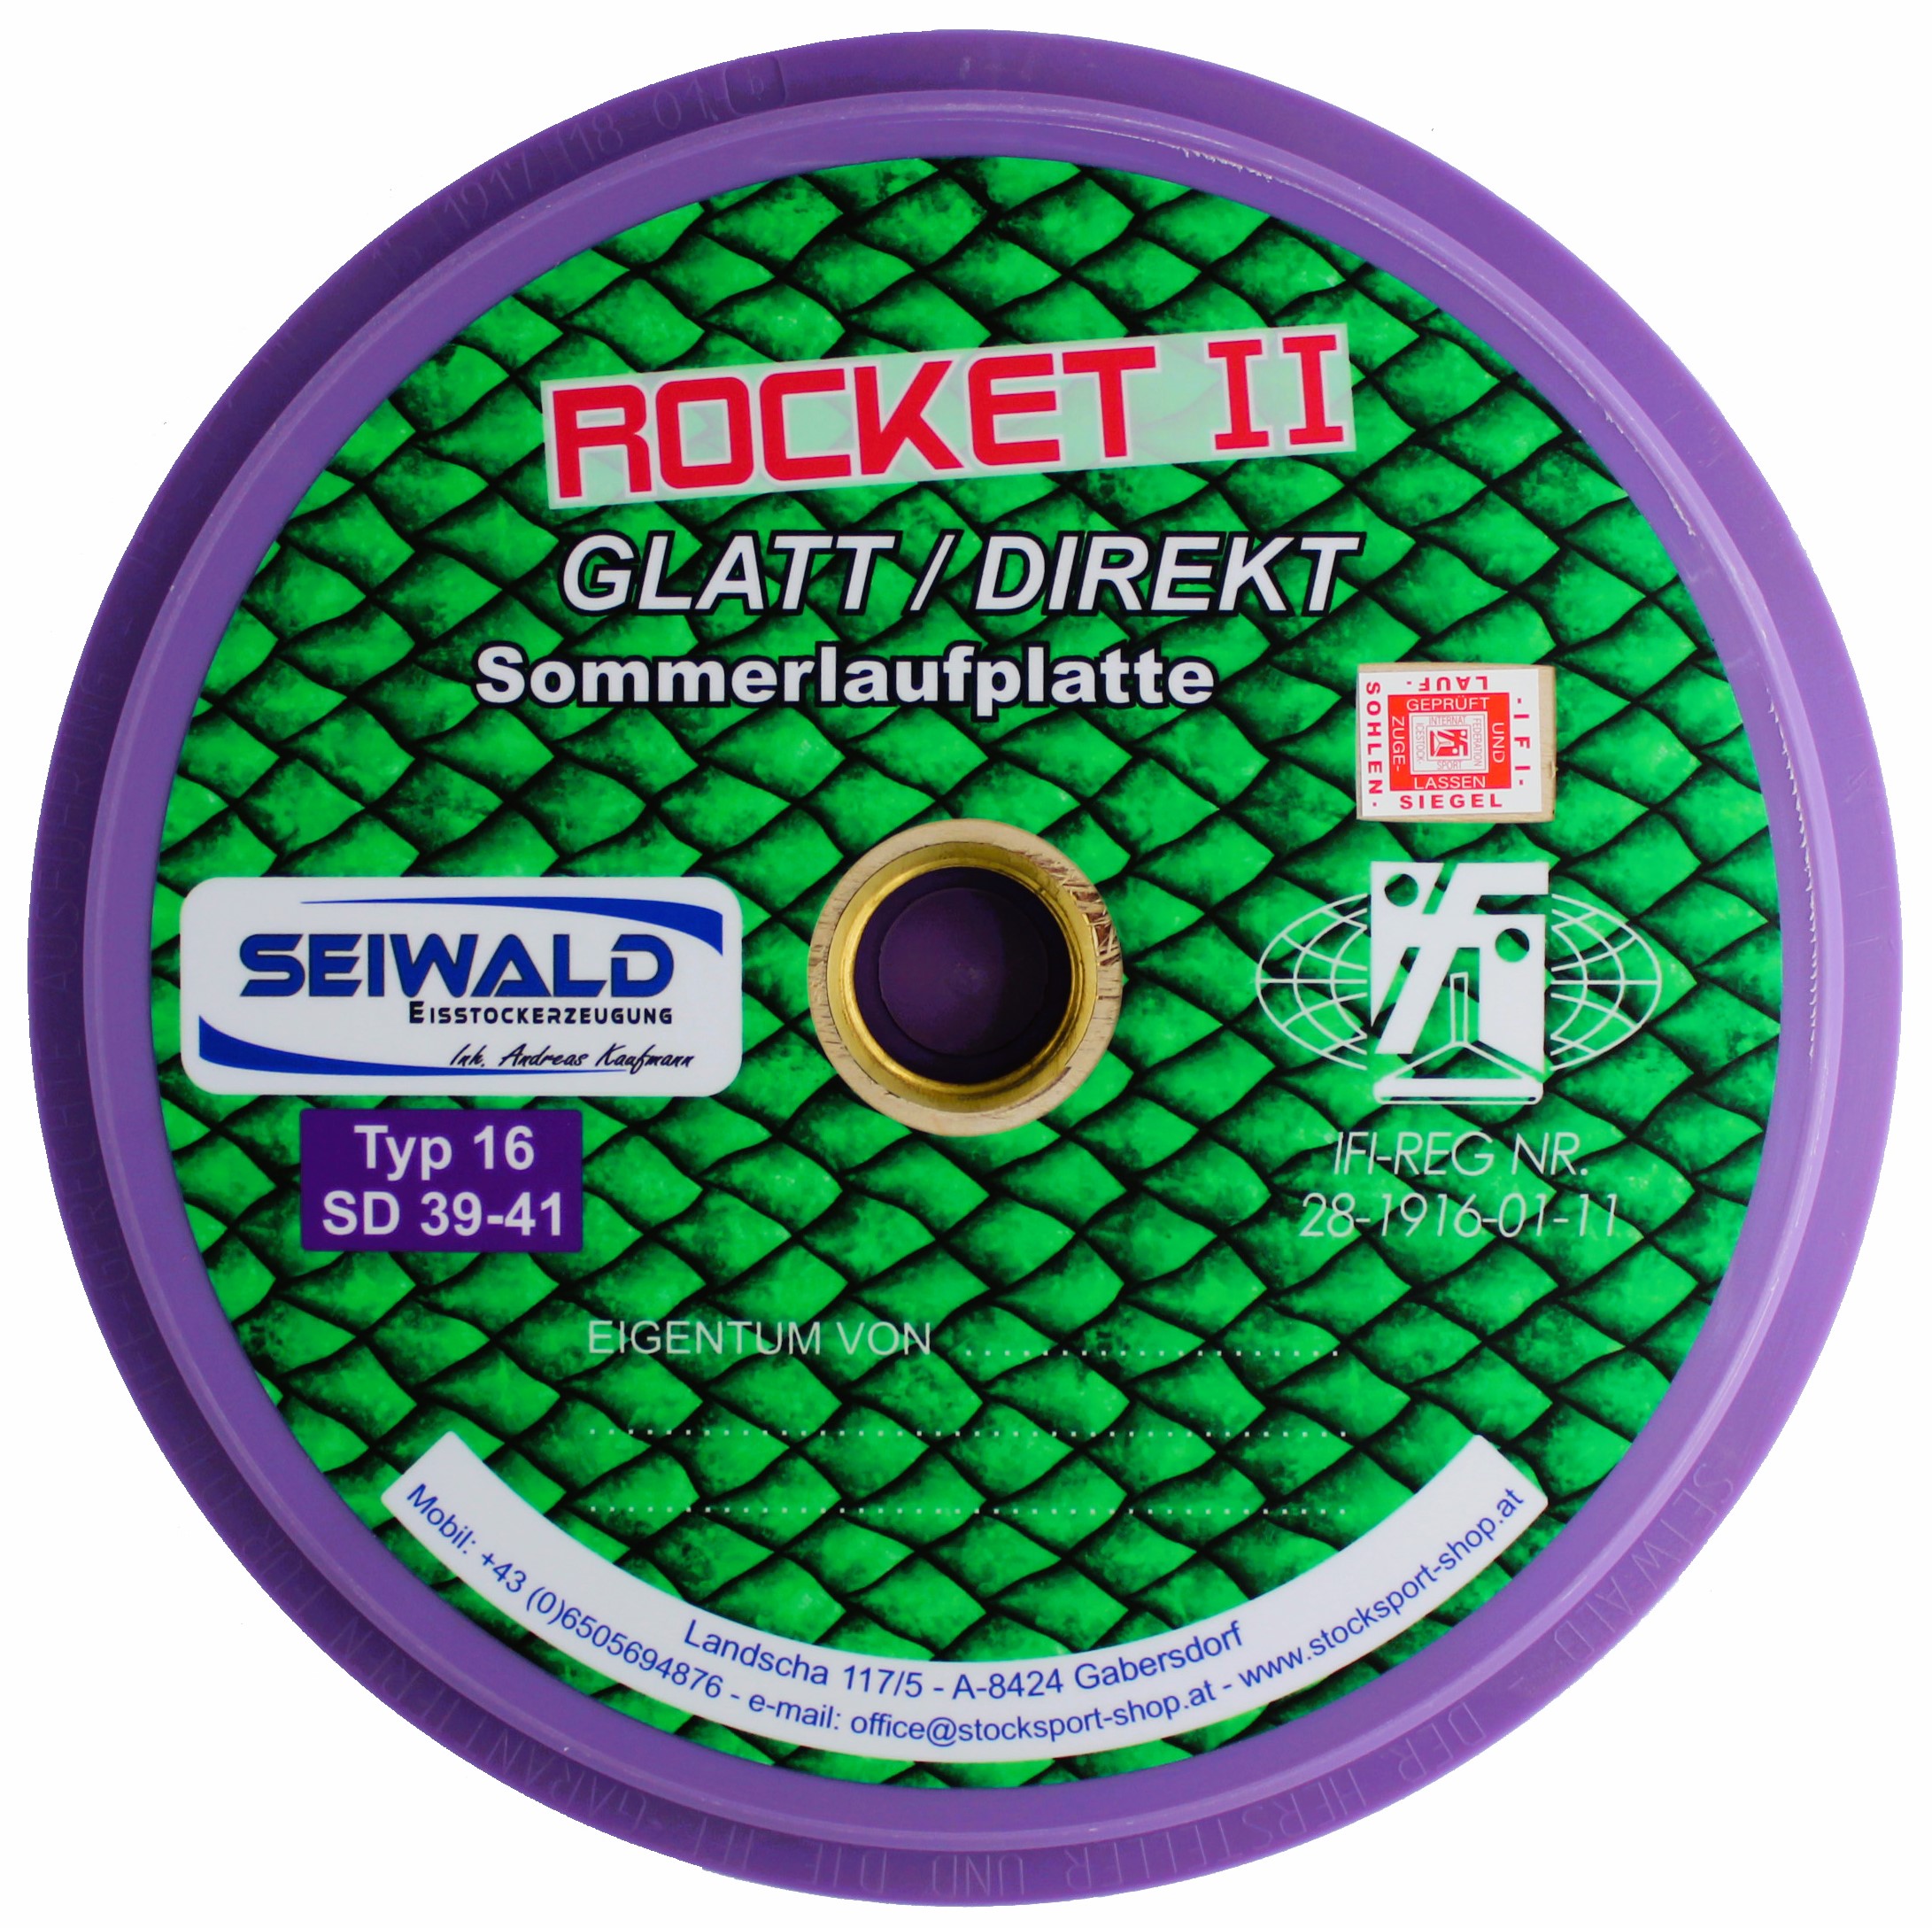 SEIWALD Rocket II Glatt Lila / Sehr schnelle Stockplatte